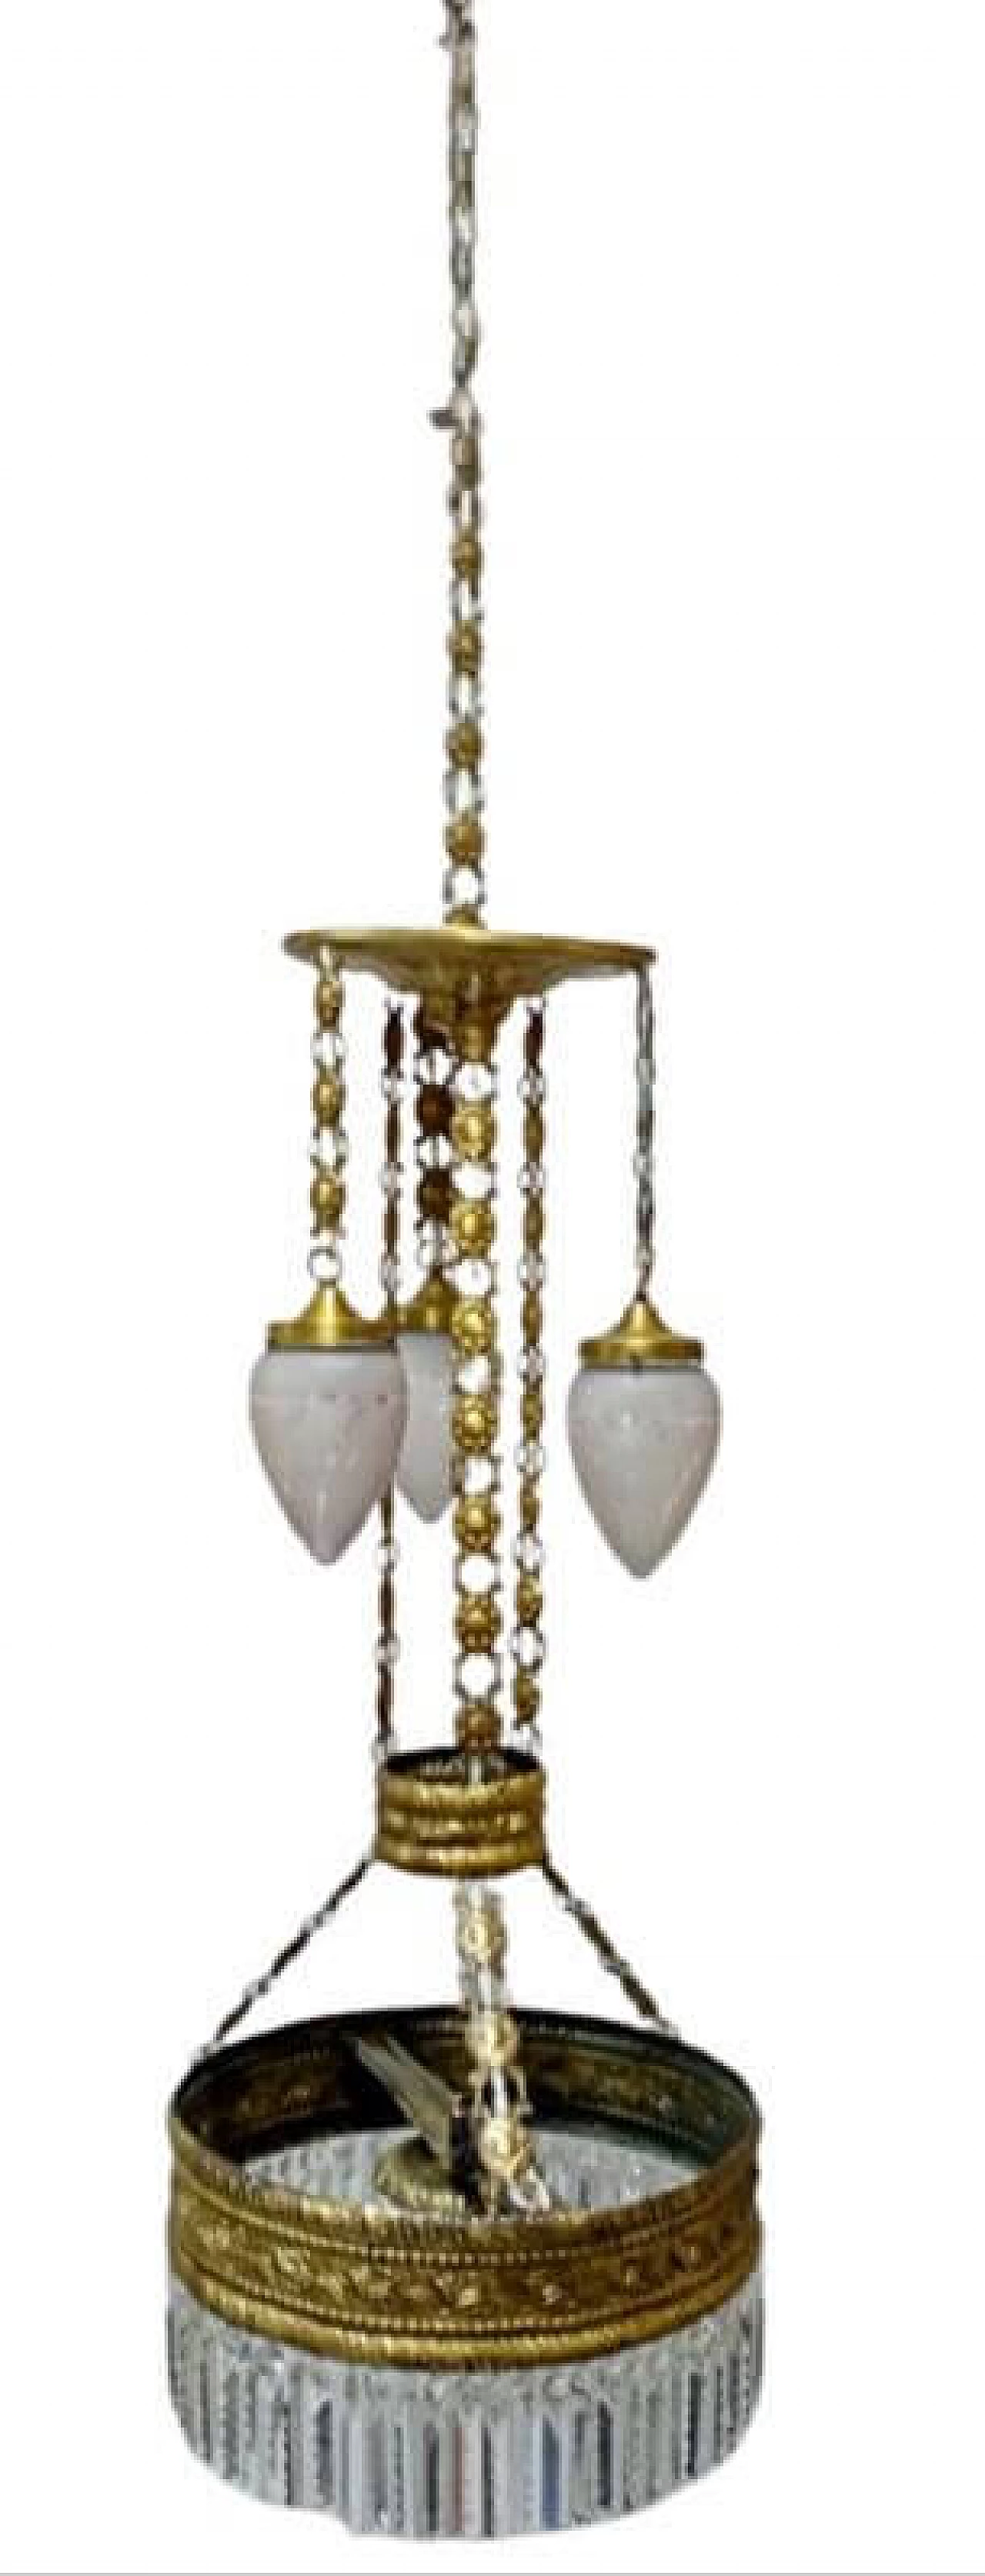 Art Nouveau chandelier in hammered brass, late 19th century 1